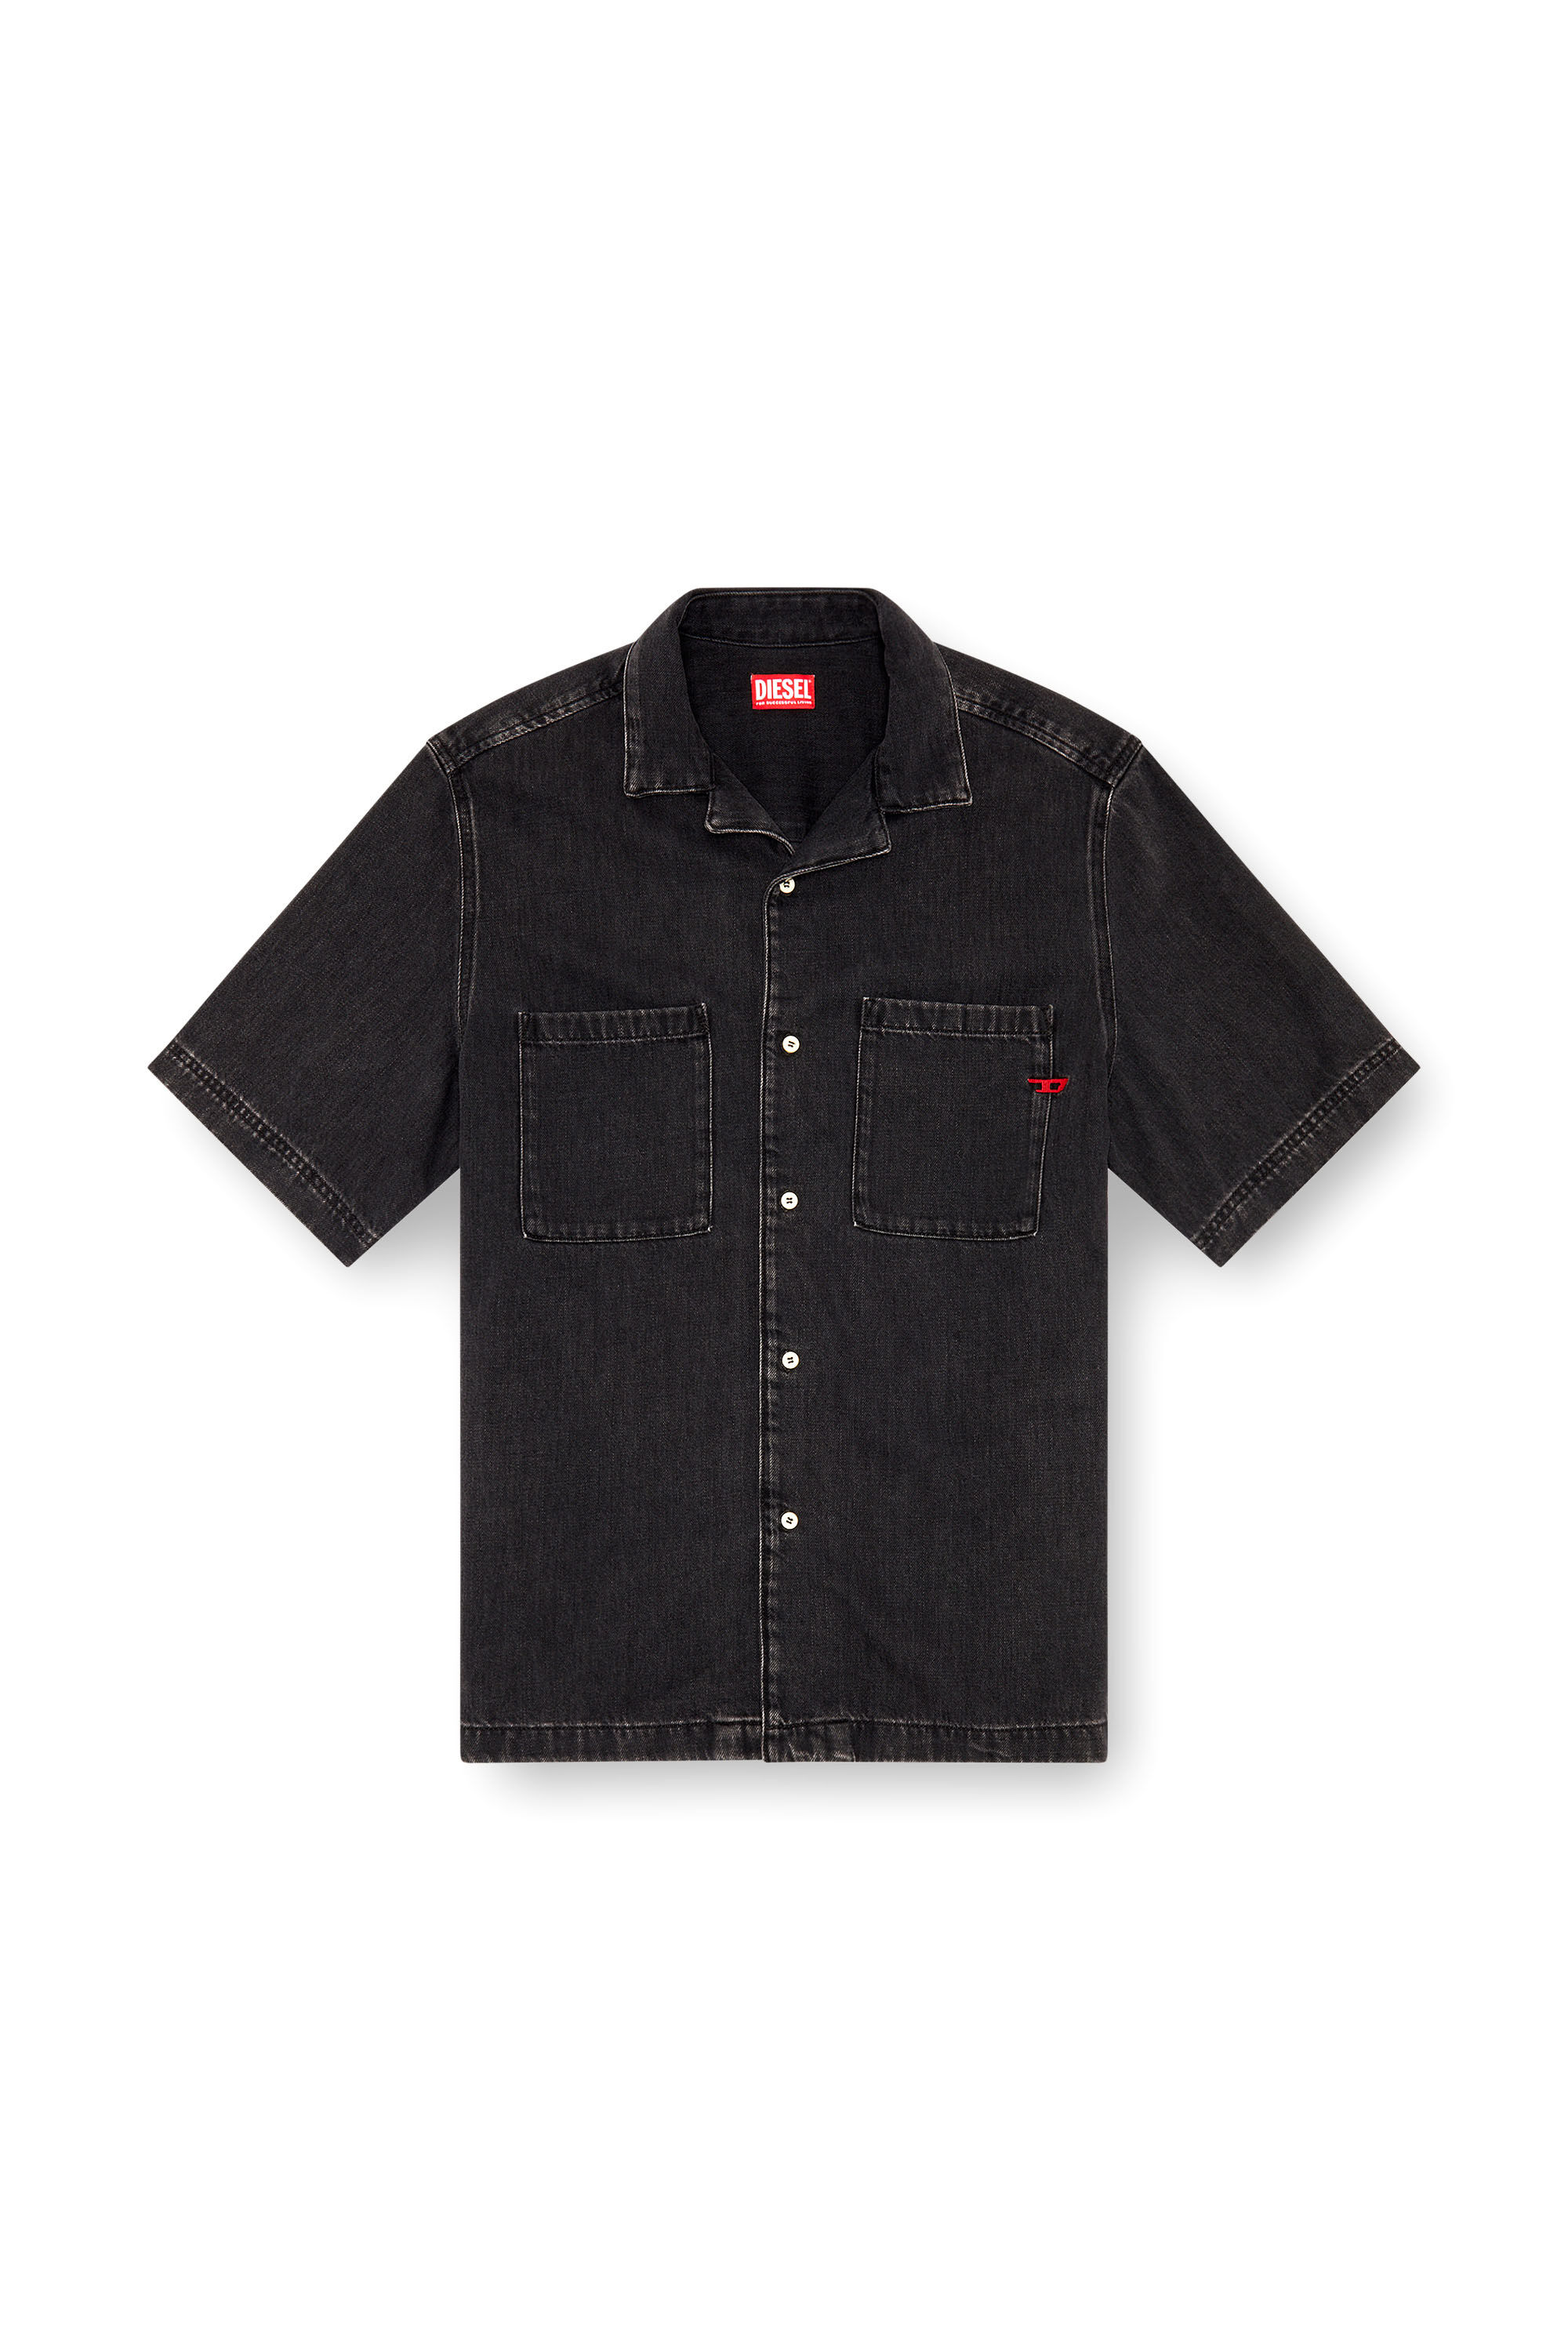 Diesel - D-PAROSHORT, Man Bowling shirt in Tencel denim in Black - Image 2